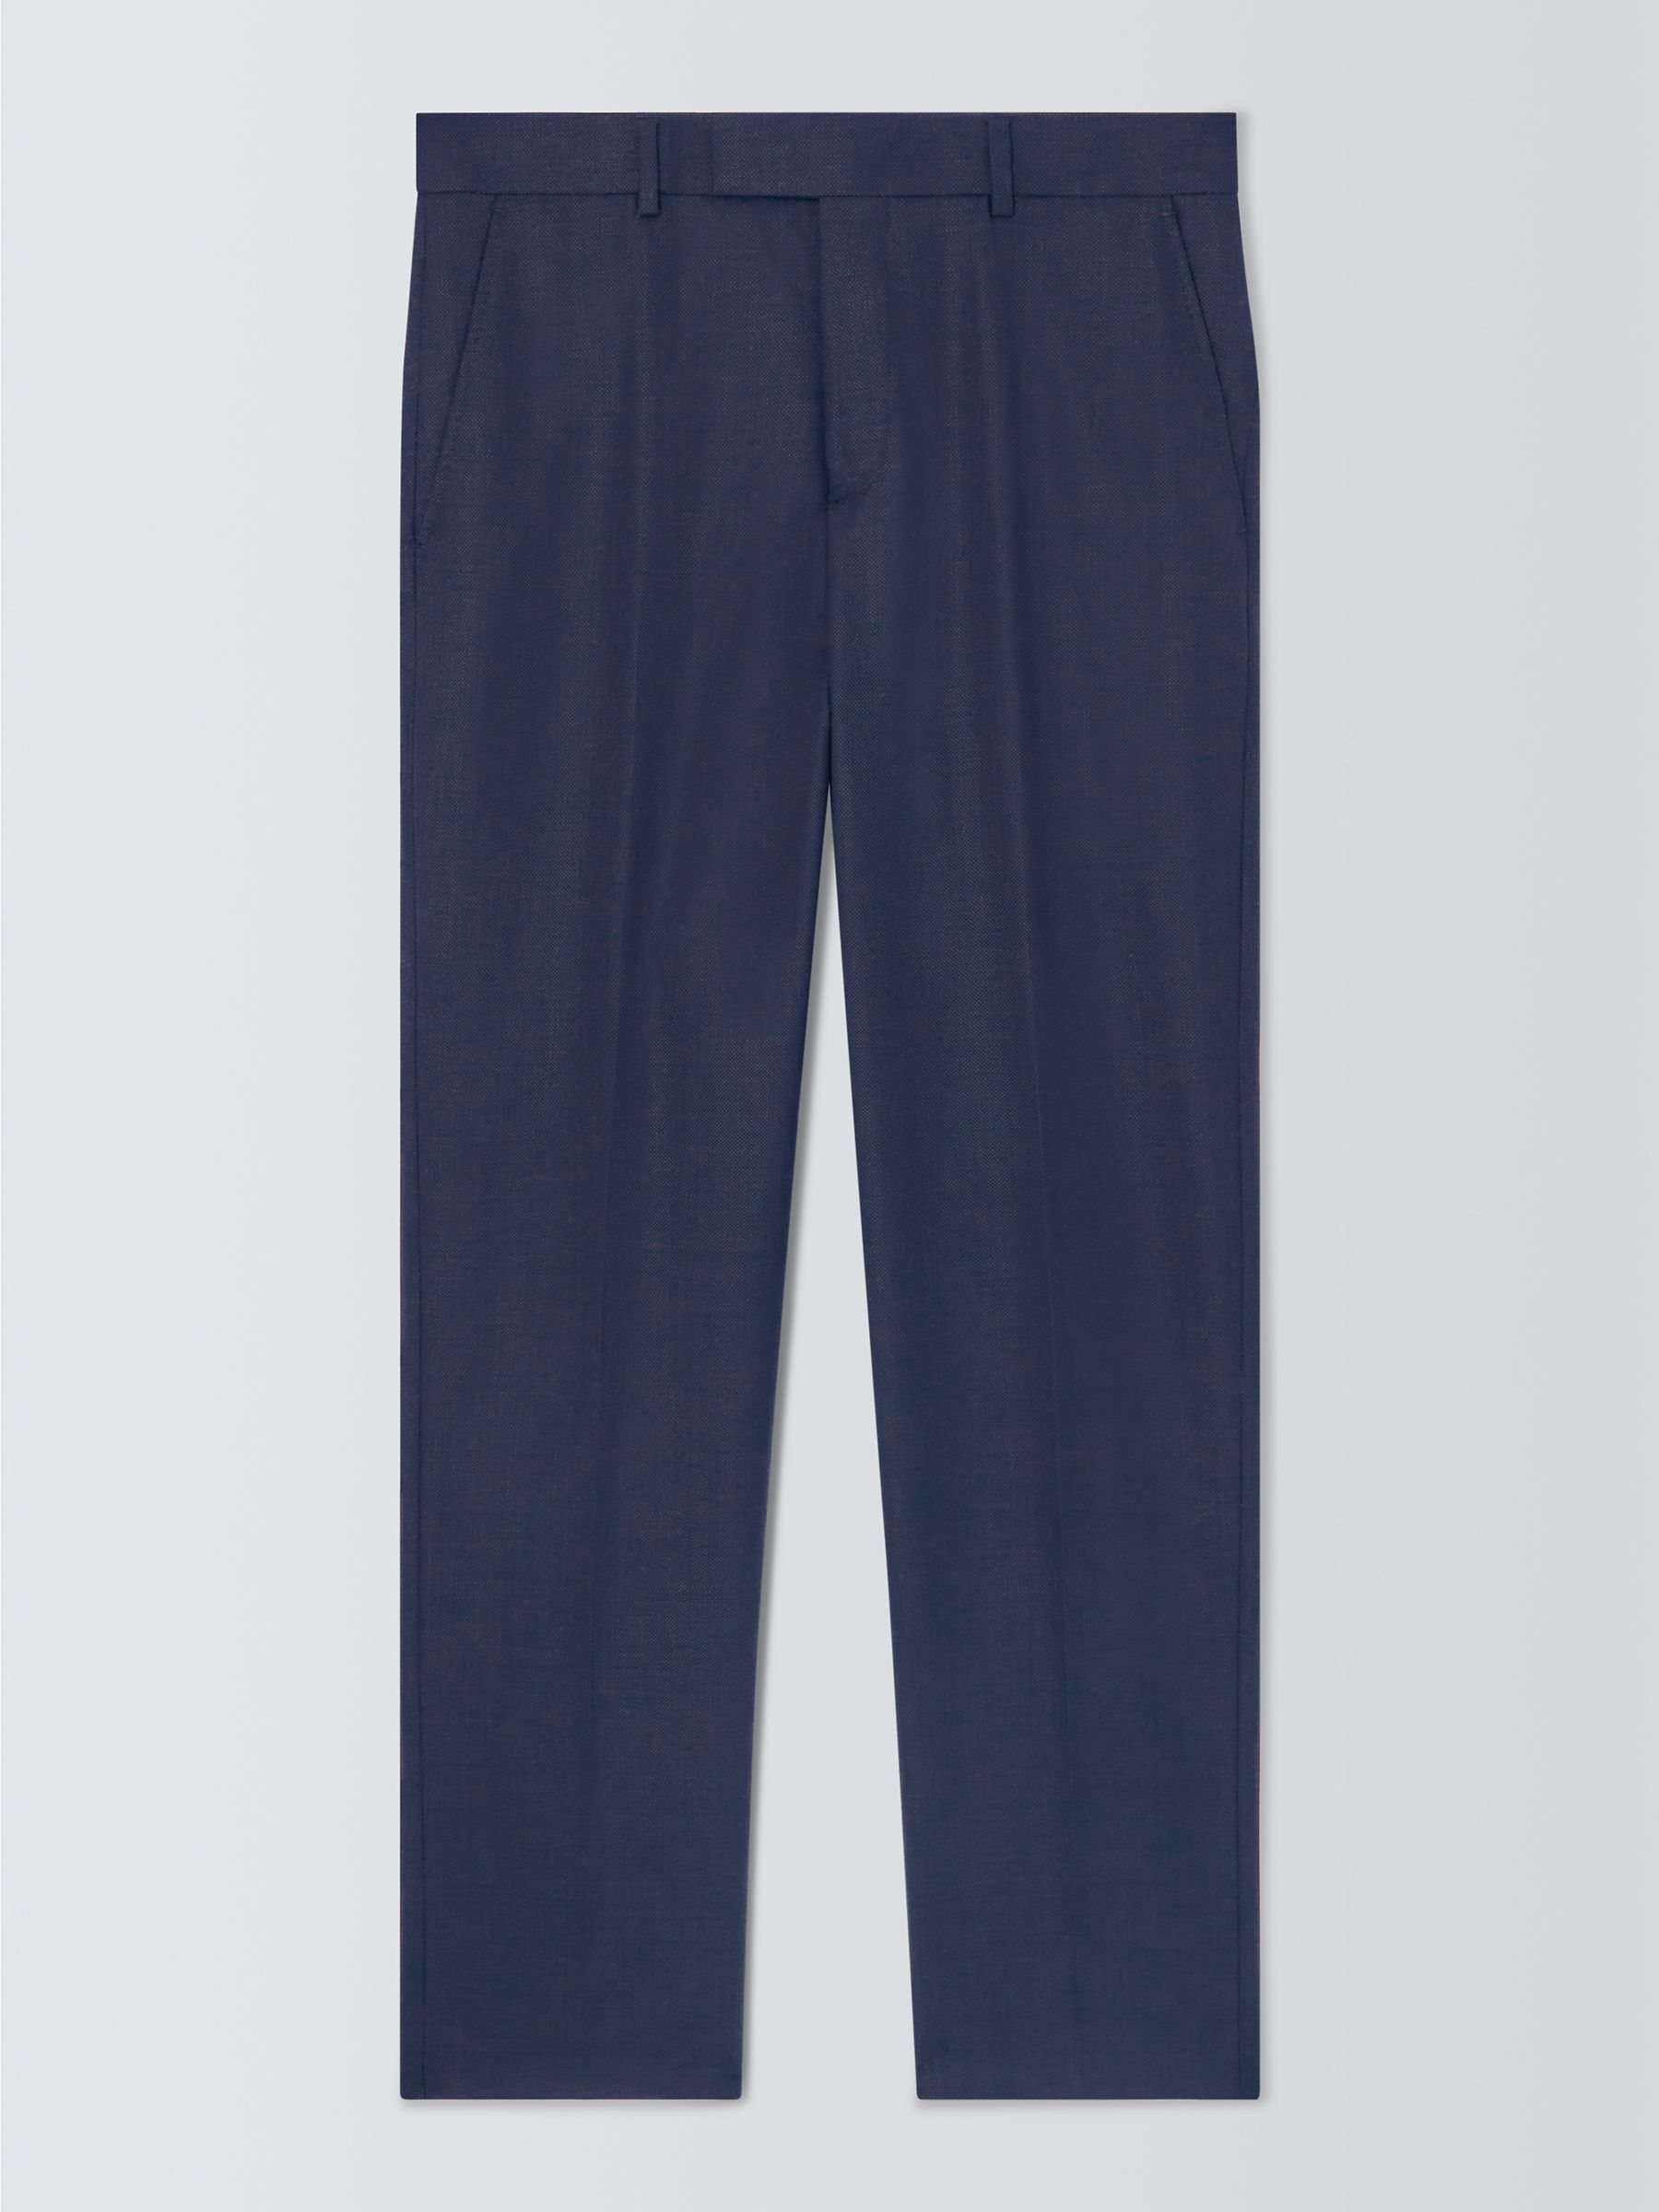 John Lewis Super 100's Birdseye Regular Suit Trousers, Navy, 34S